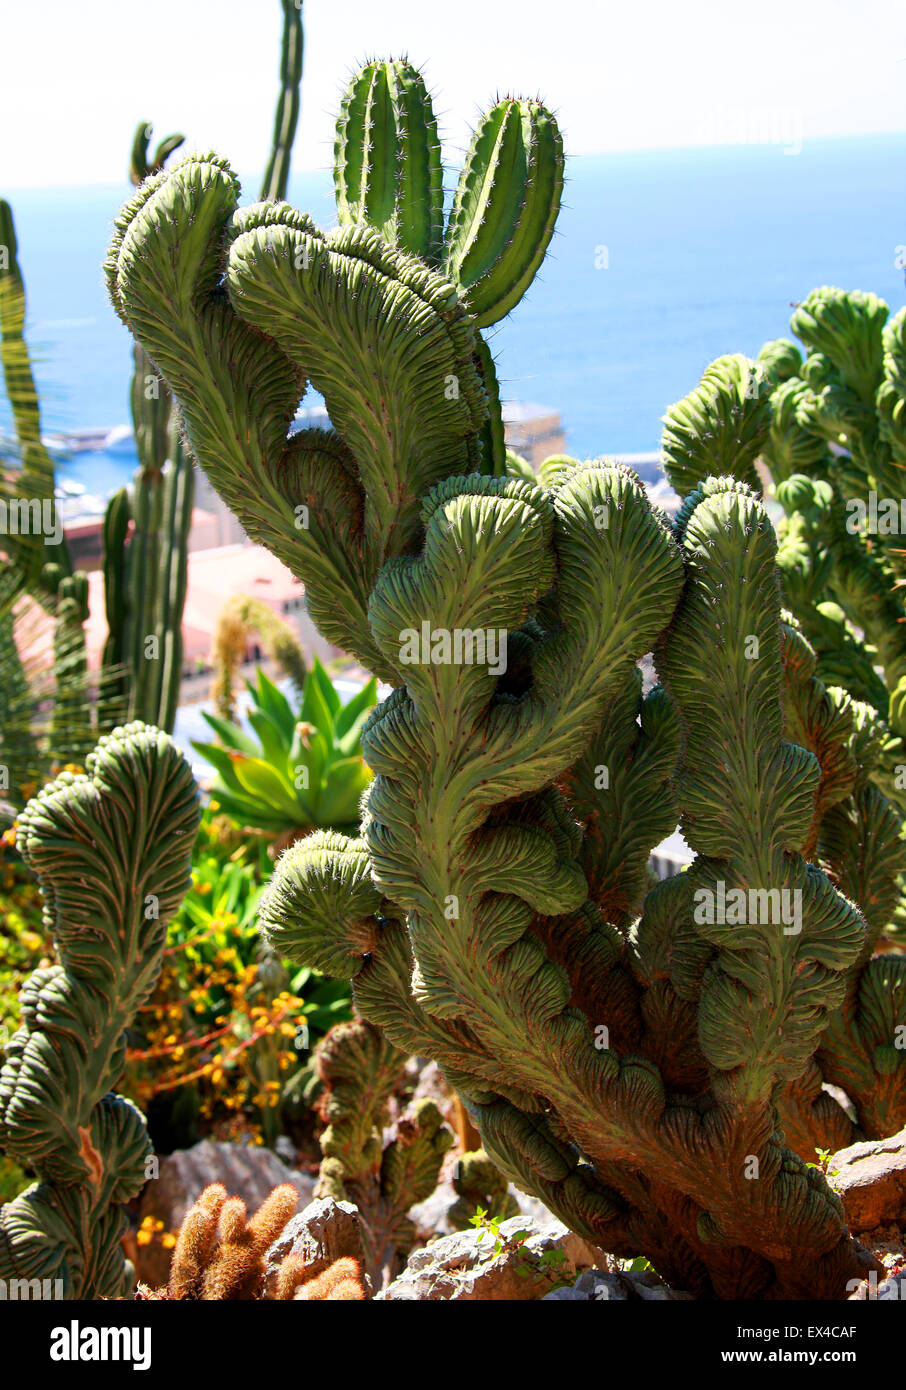 Cactus, Polaskia chichipe Cristate cristata, Cactaceae. México. Los Jardines Botánicos de Mónaco, Mónaco. Foto de stock